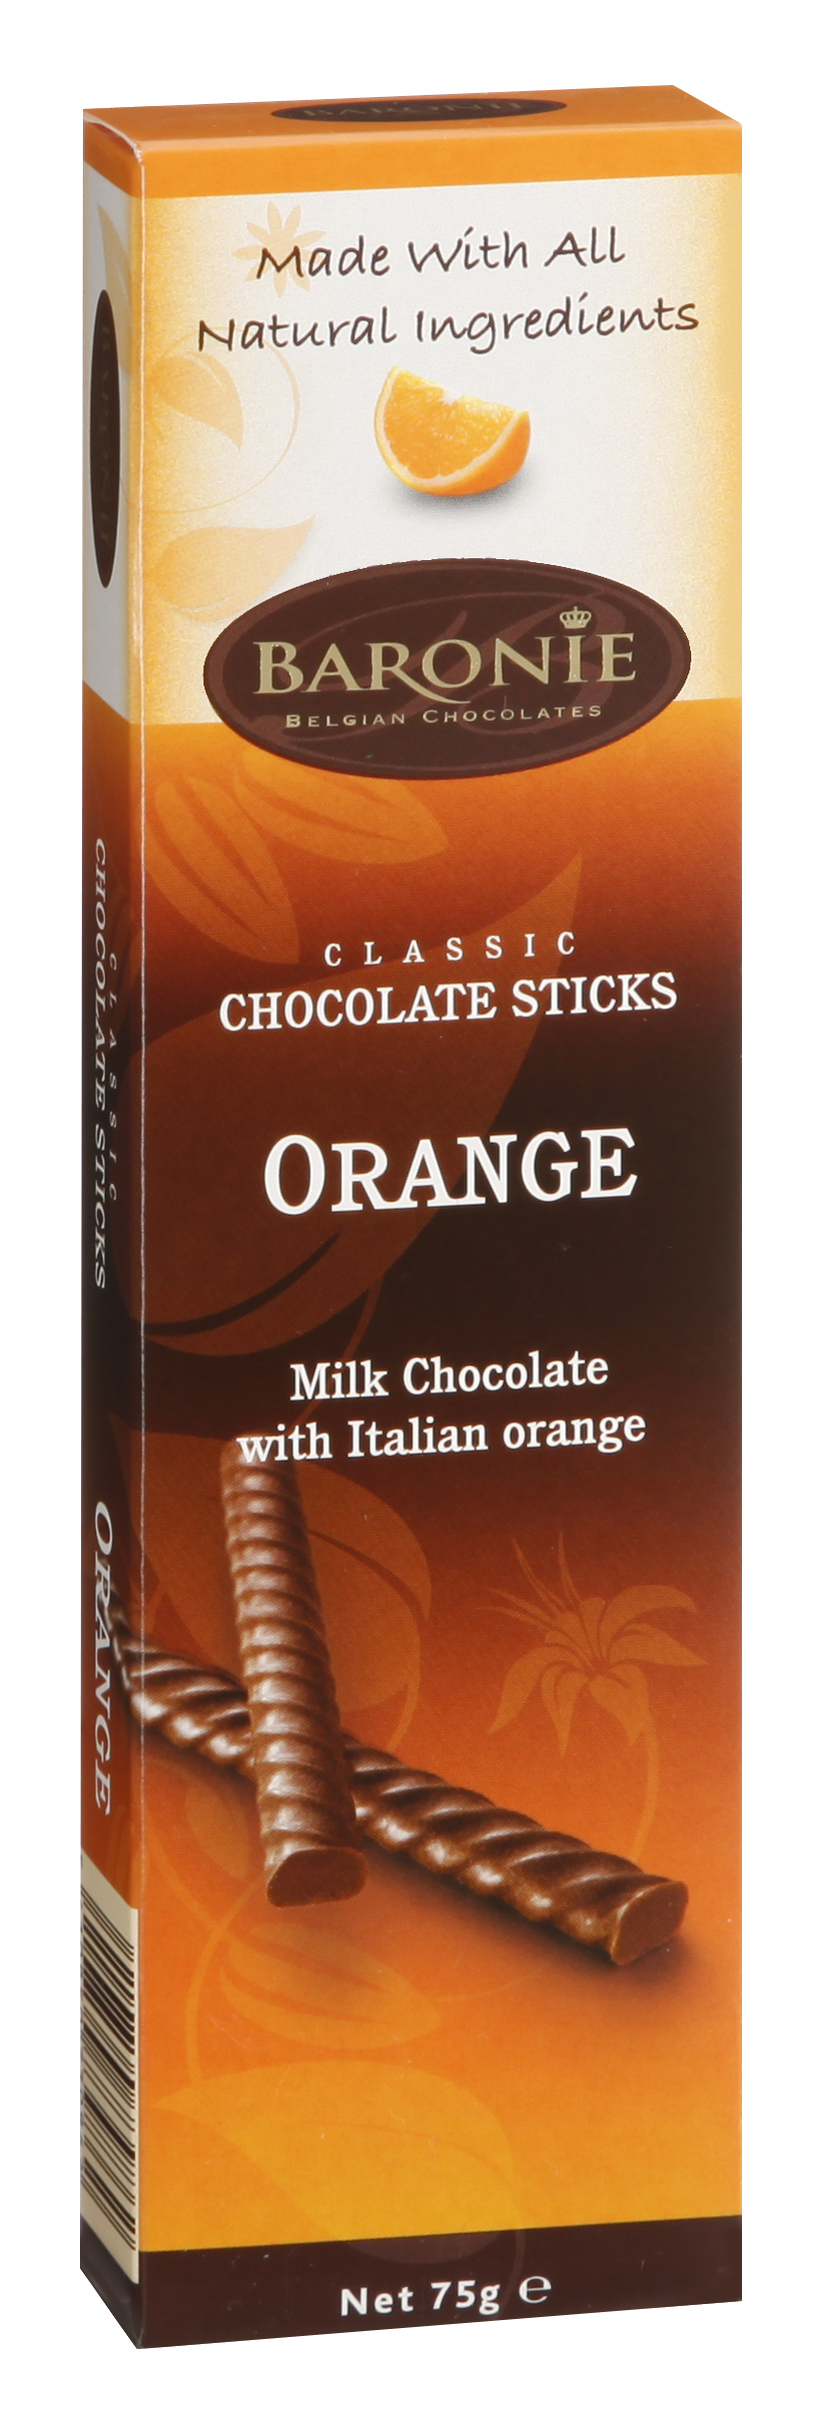 Baronie Orange Chocolate Sticks